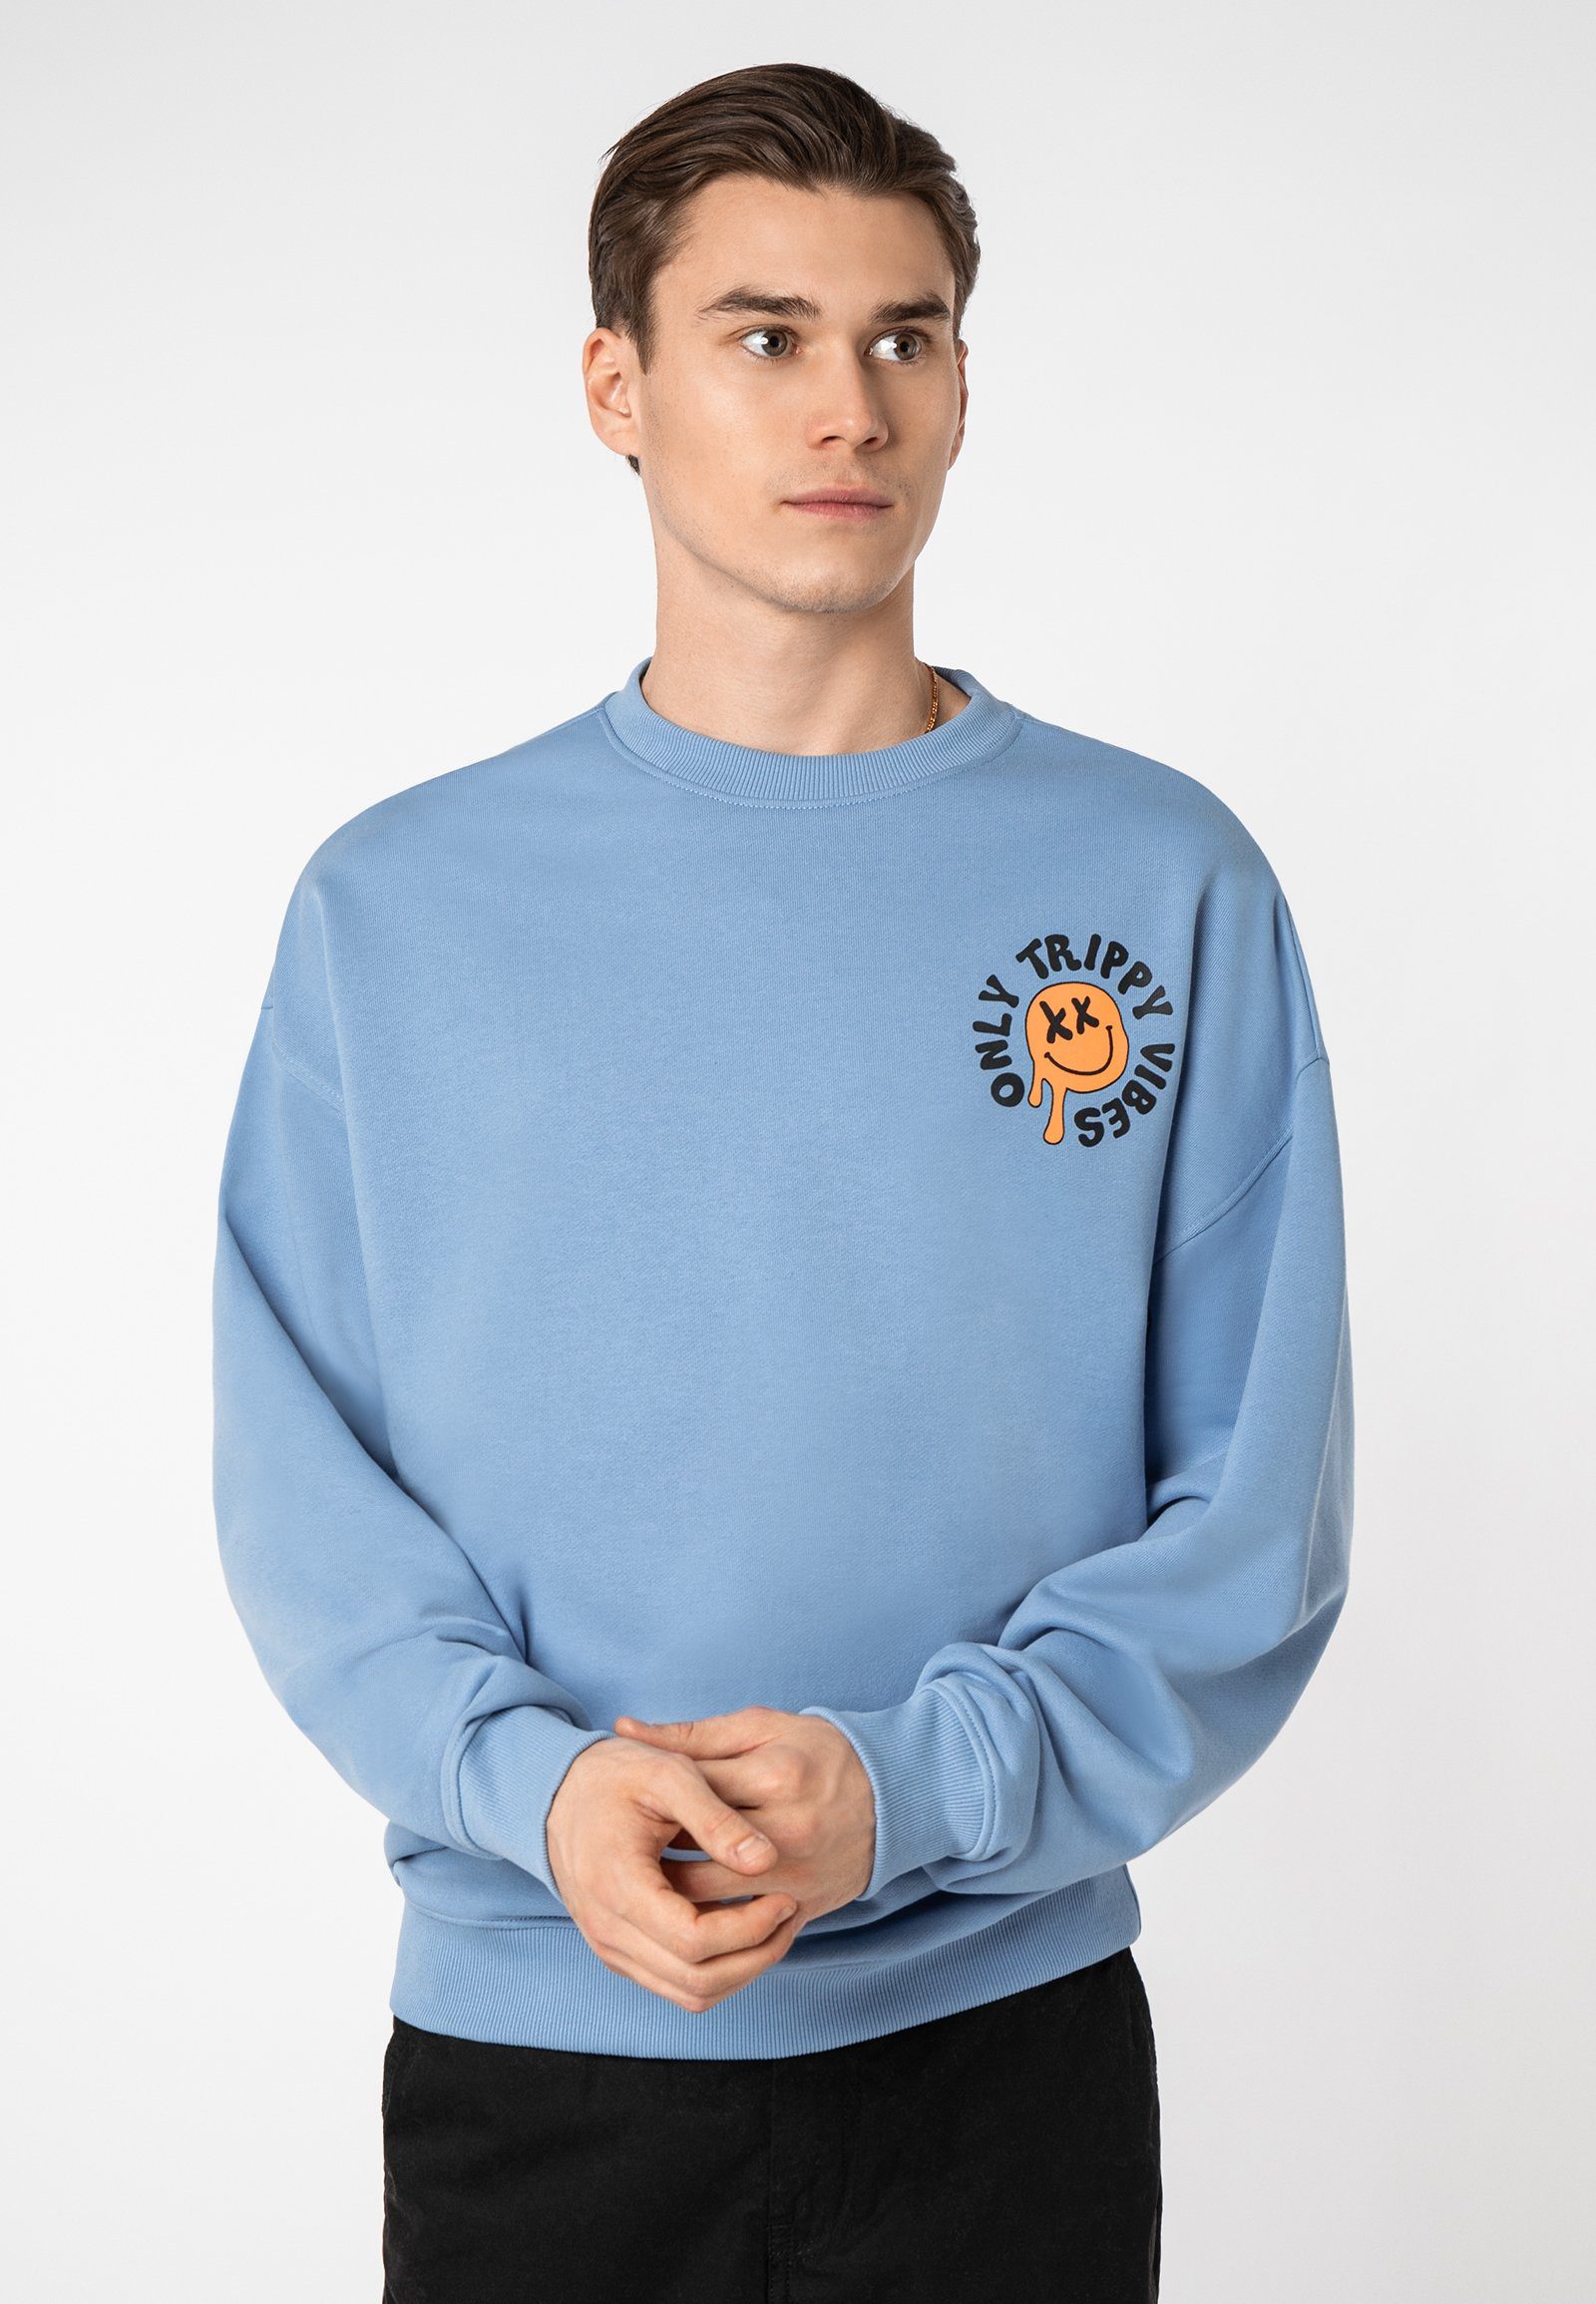 SUBLEVEL Sweatshirt Sweatshirt Oversize mit Backprint